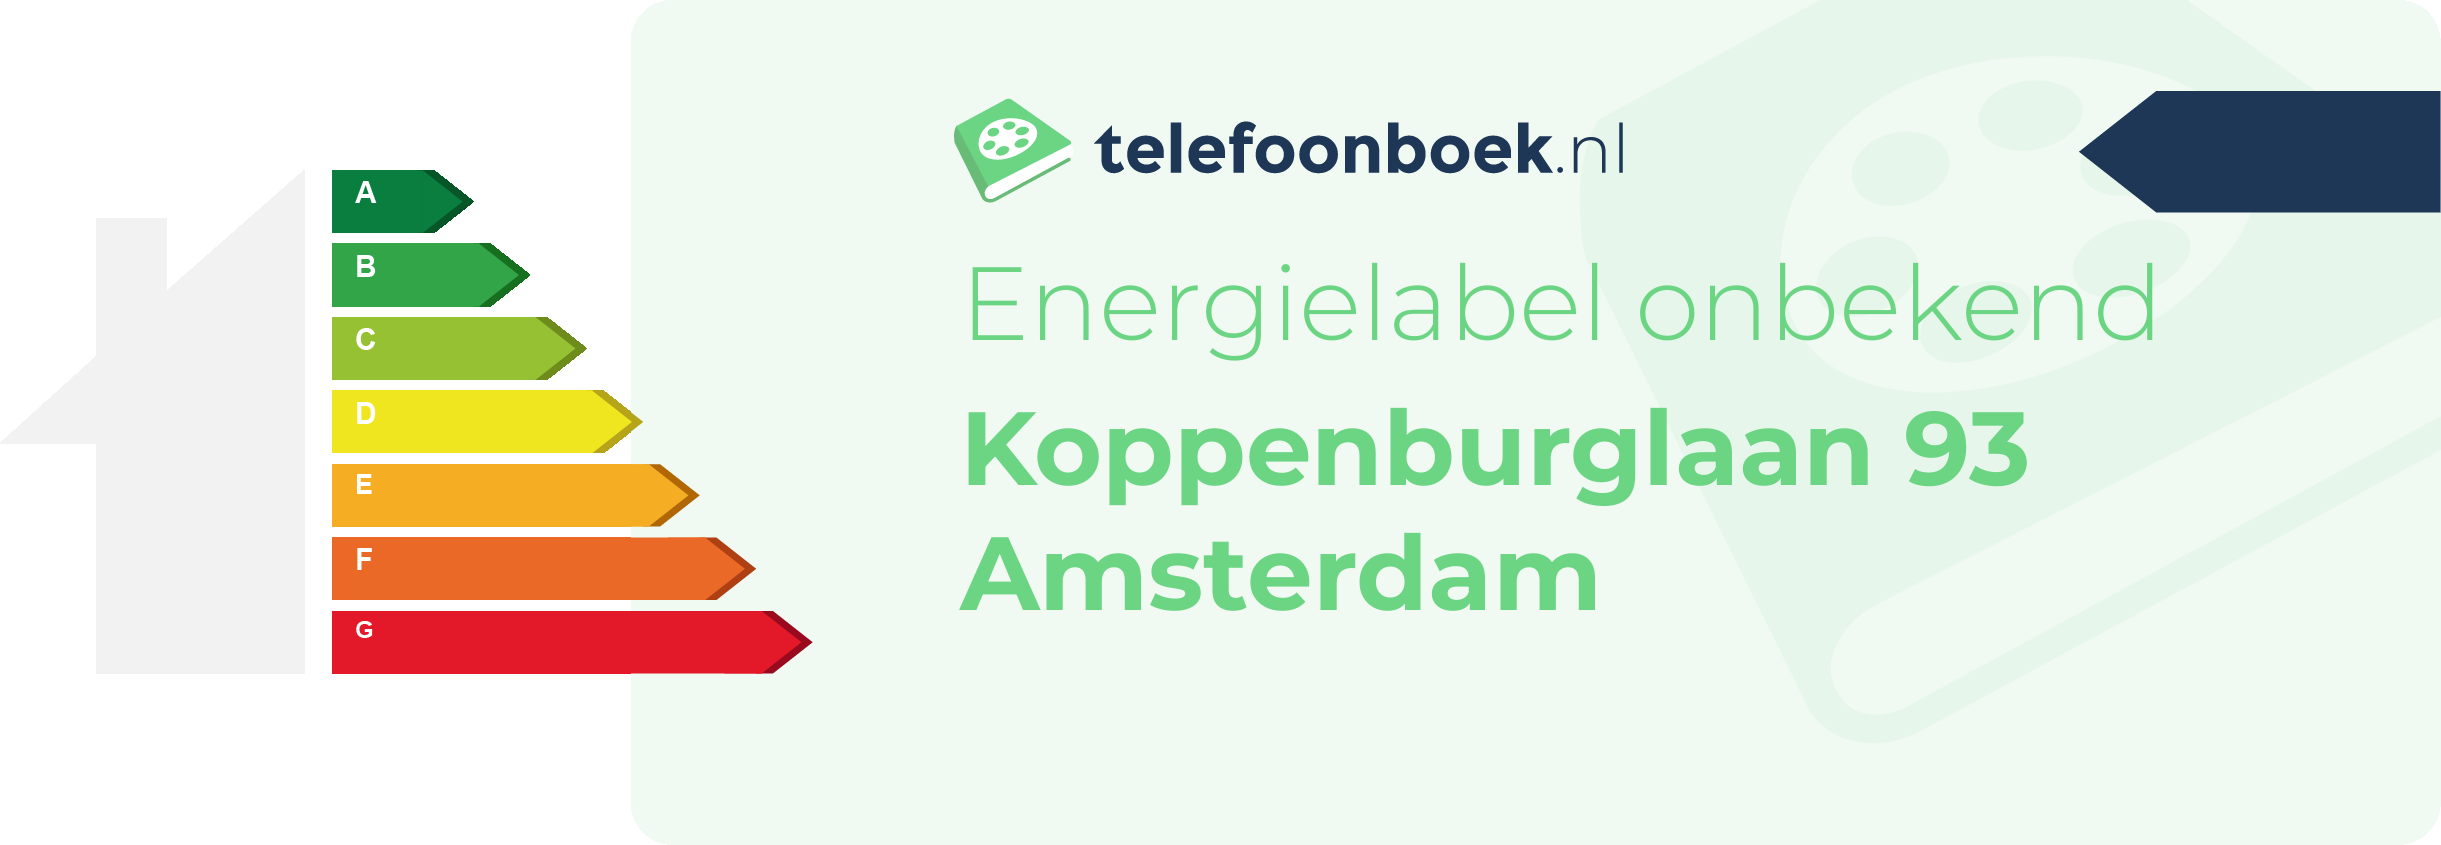 Energielabel Koppenburglaan 93 Amsterdam